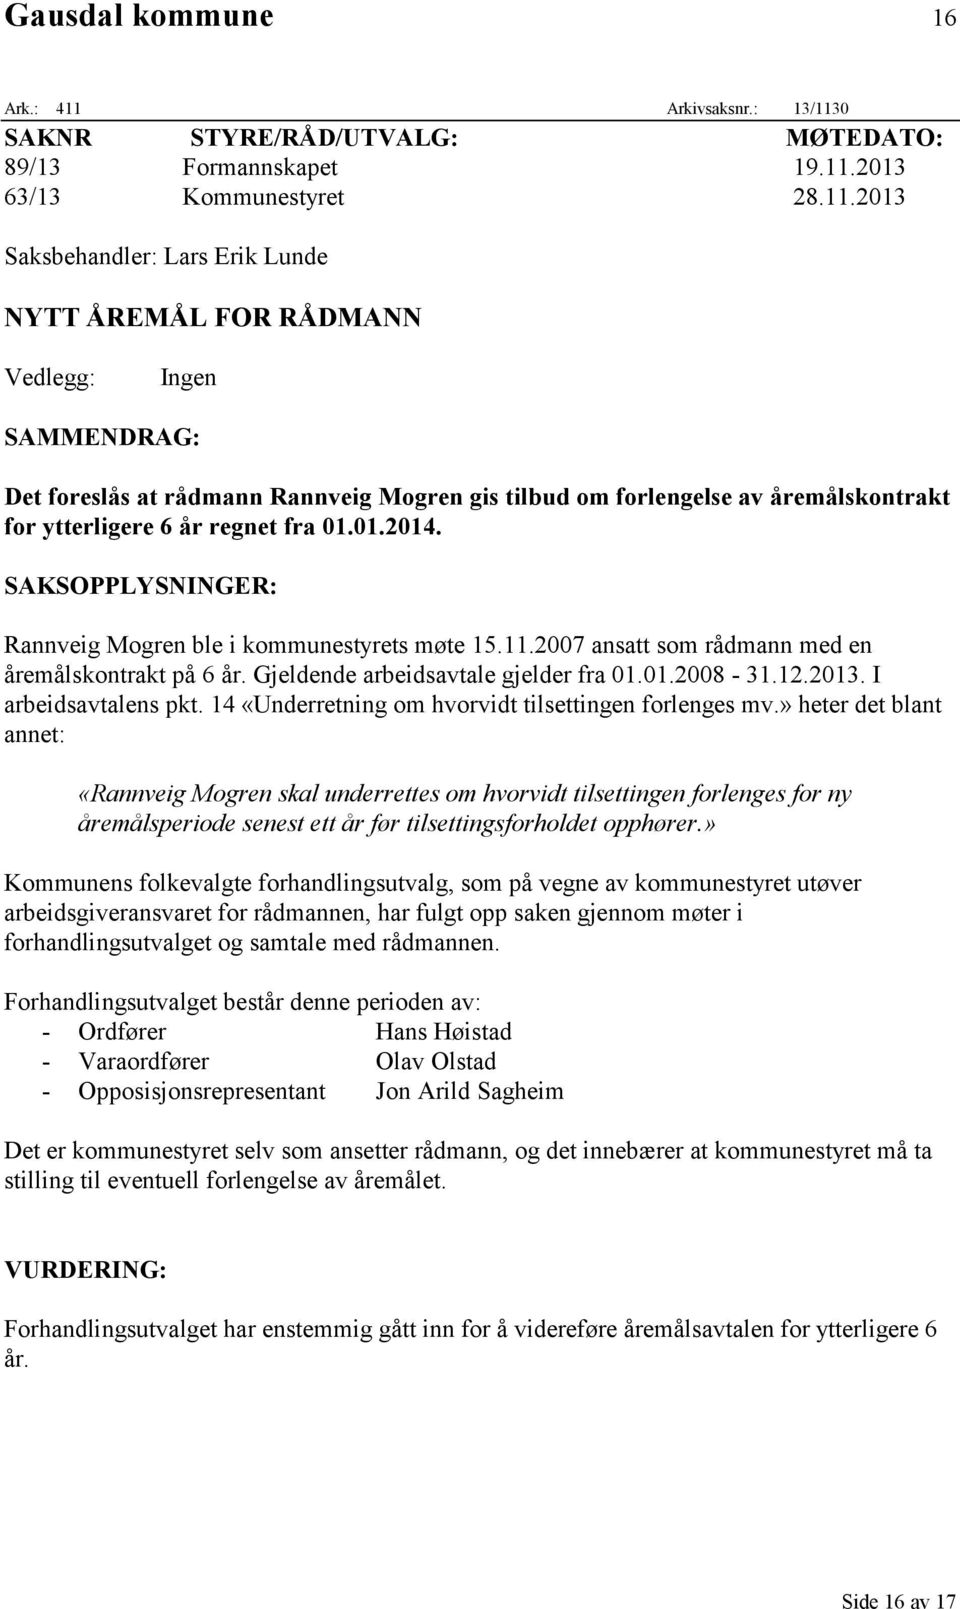 0 SAKNR STYRE/RÅD/UTVALG: MØTEDATO: 89/13 Formannskapet 19.11.